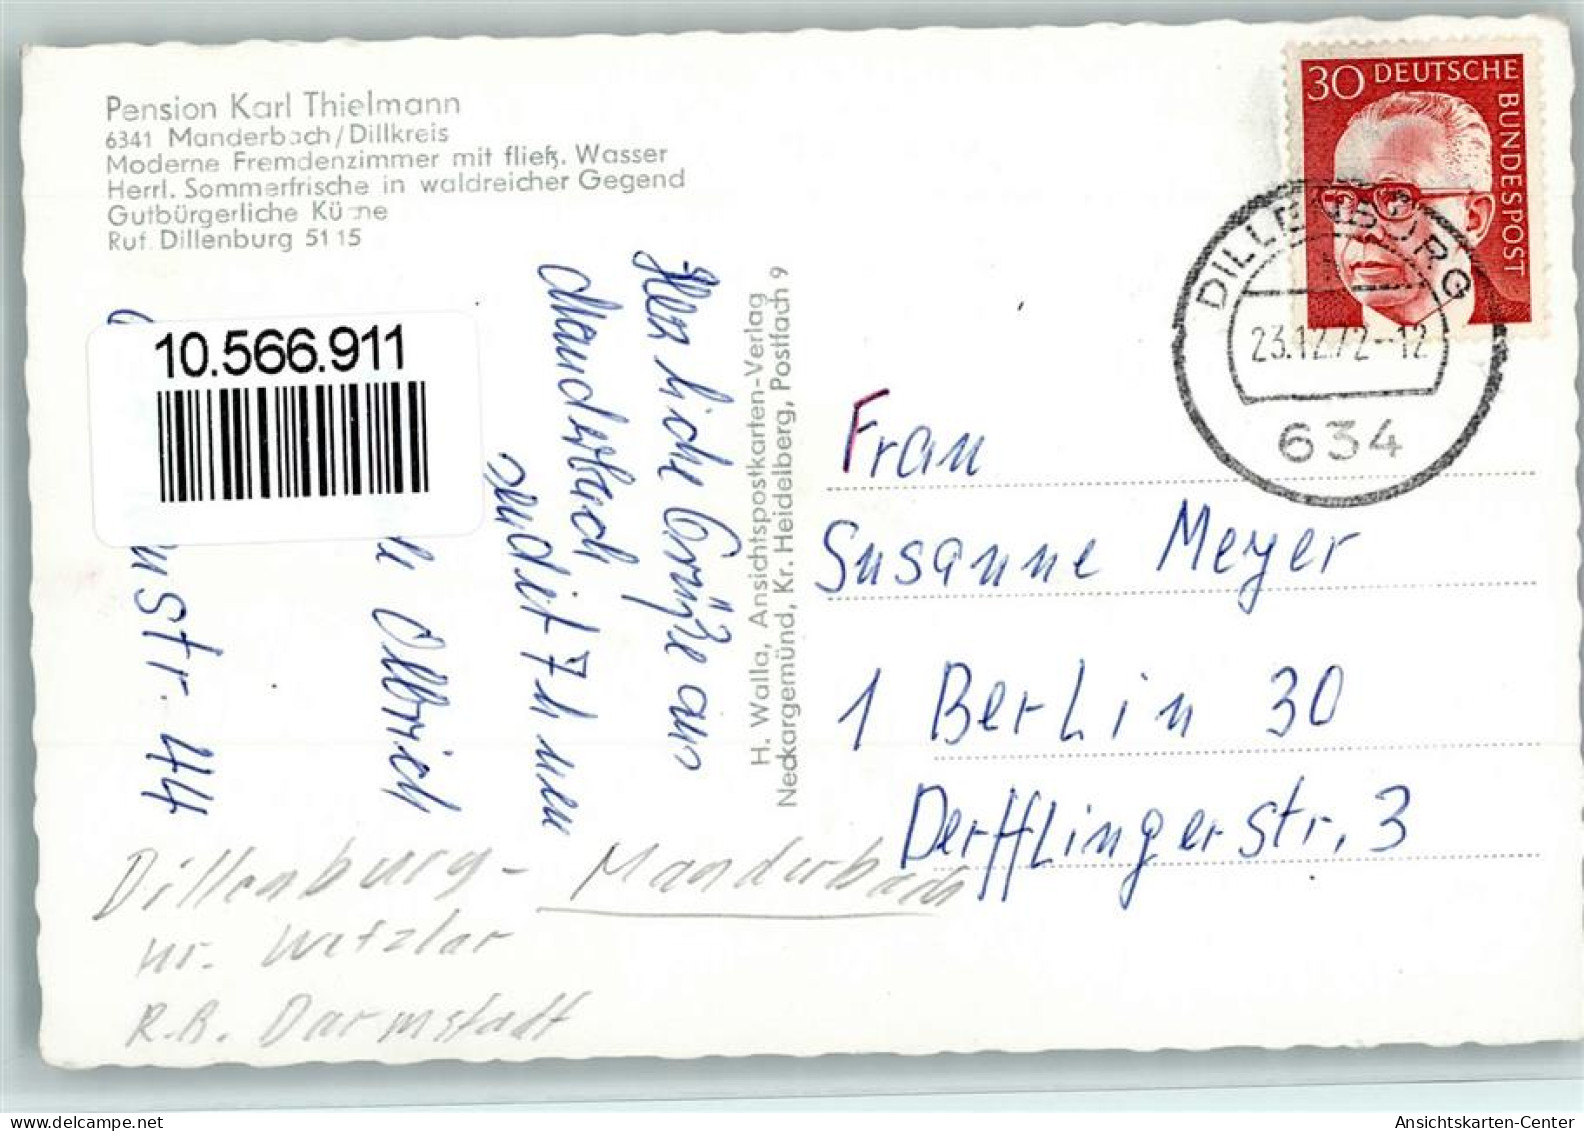 10566911 - Manderbach - Dillenburg